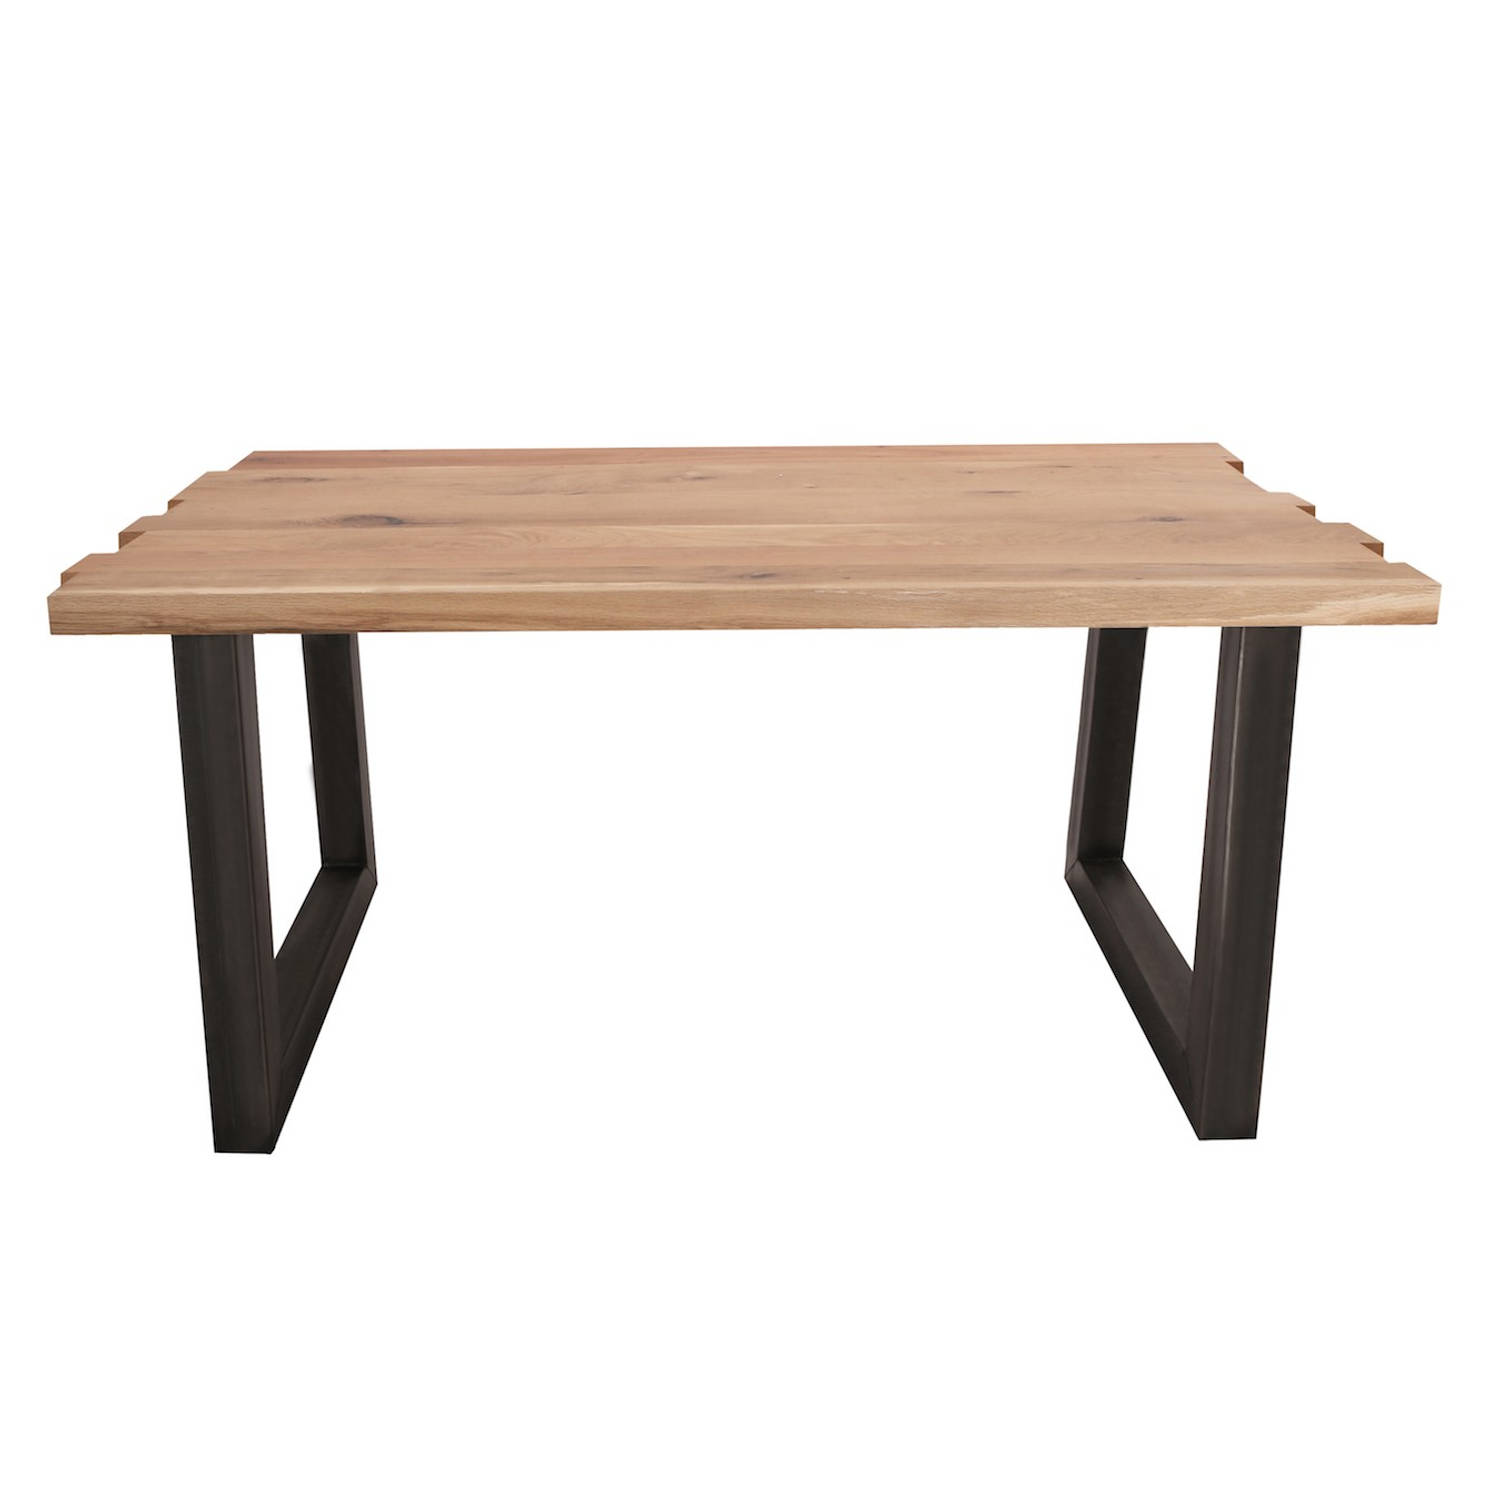 Feel Furniture - 200x100 Eettafel - Massief Boomstamblad Eiken - Constructed oak - 5 cm dik - U Frame